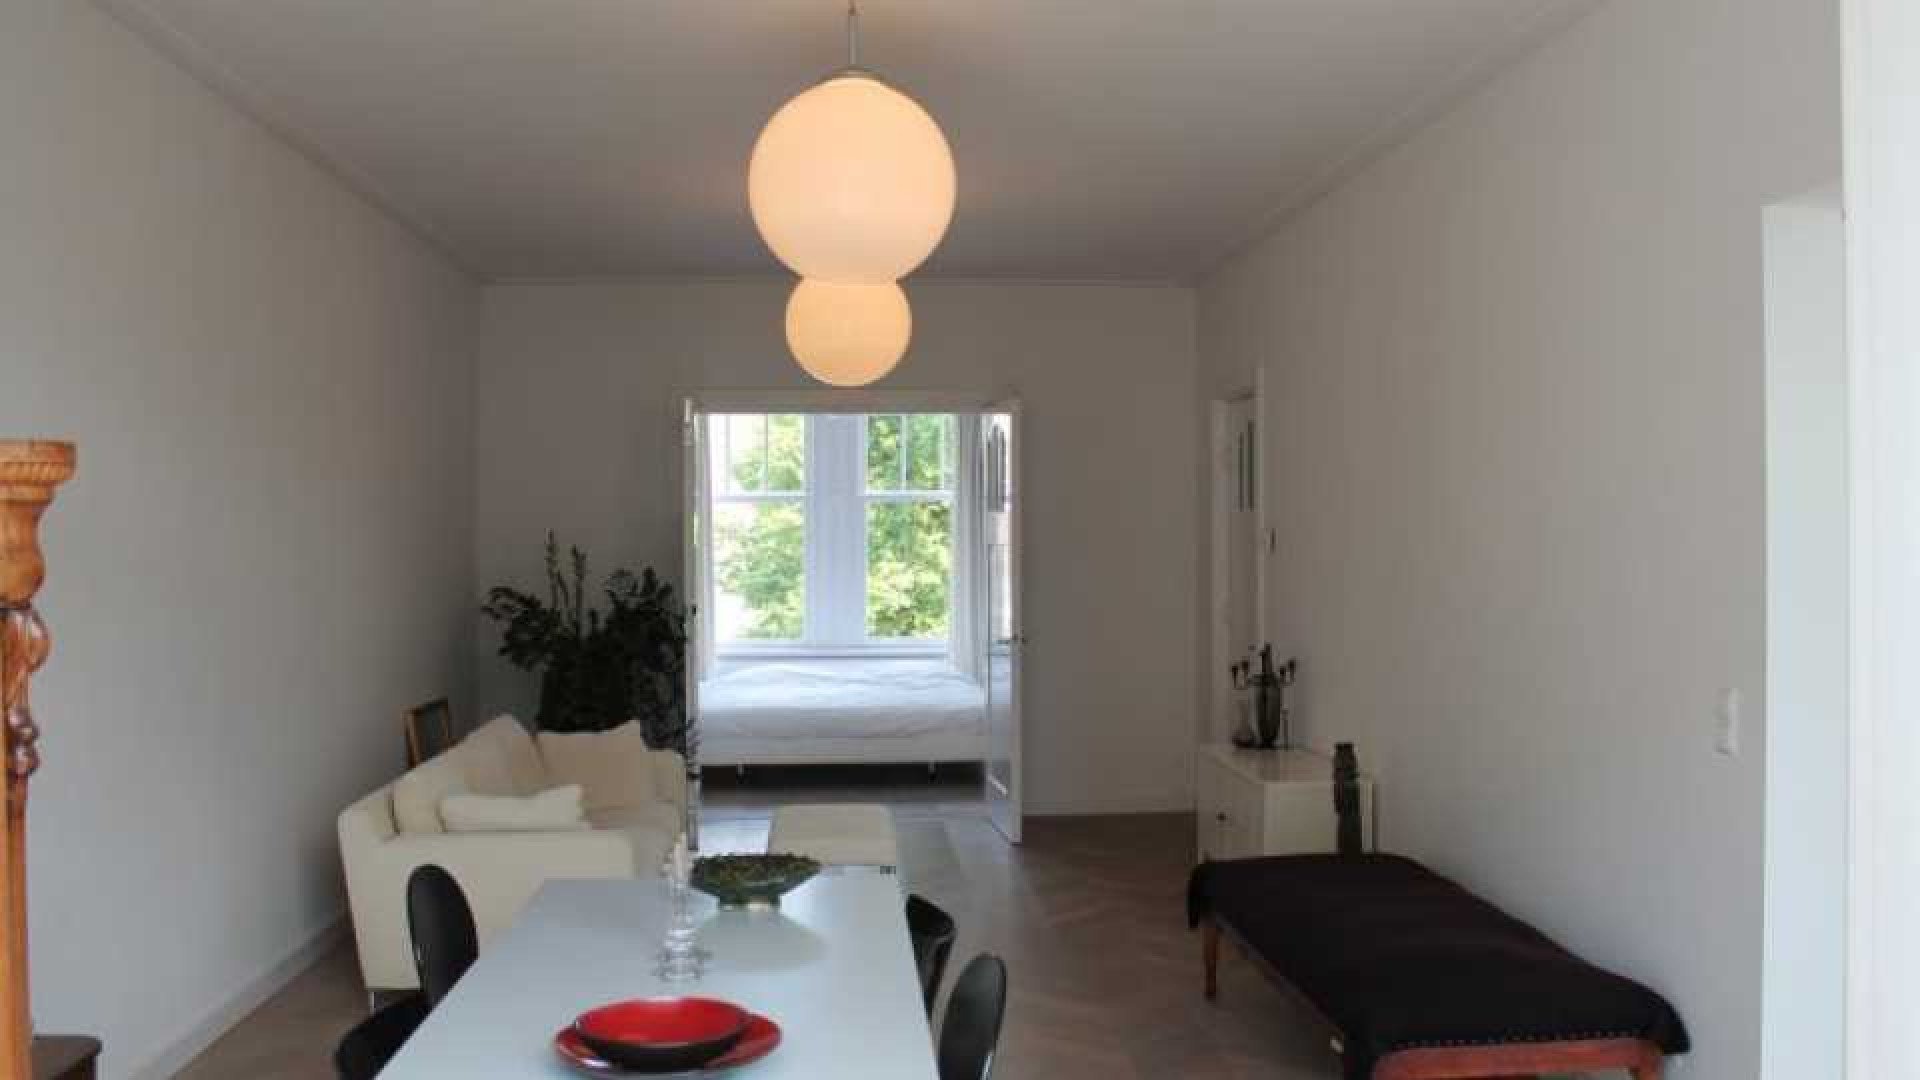 Dave Roelvink huurt appartement in Amsterdam Oud-Zuid. Zie foto's 1